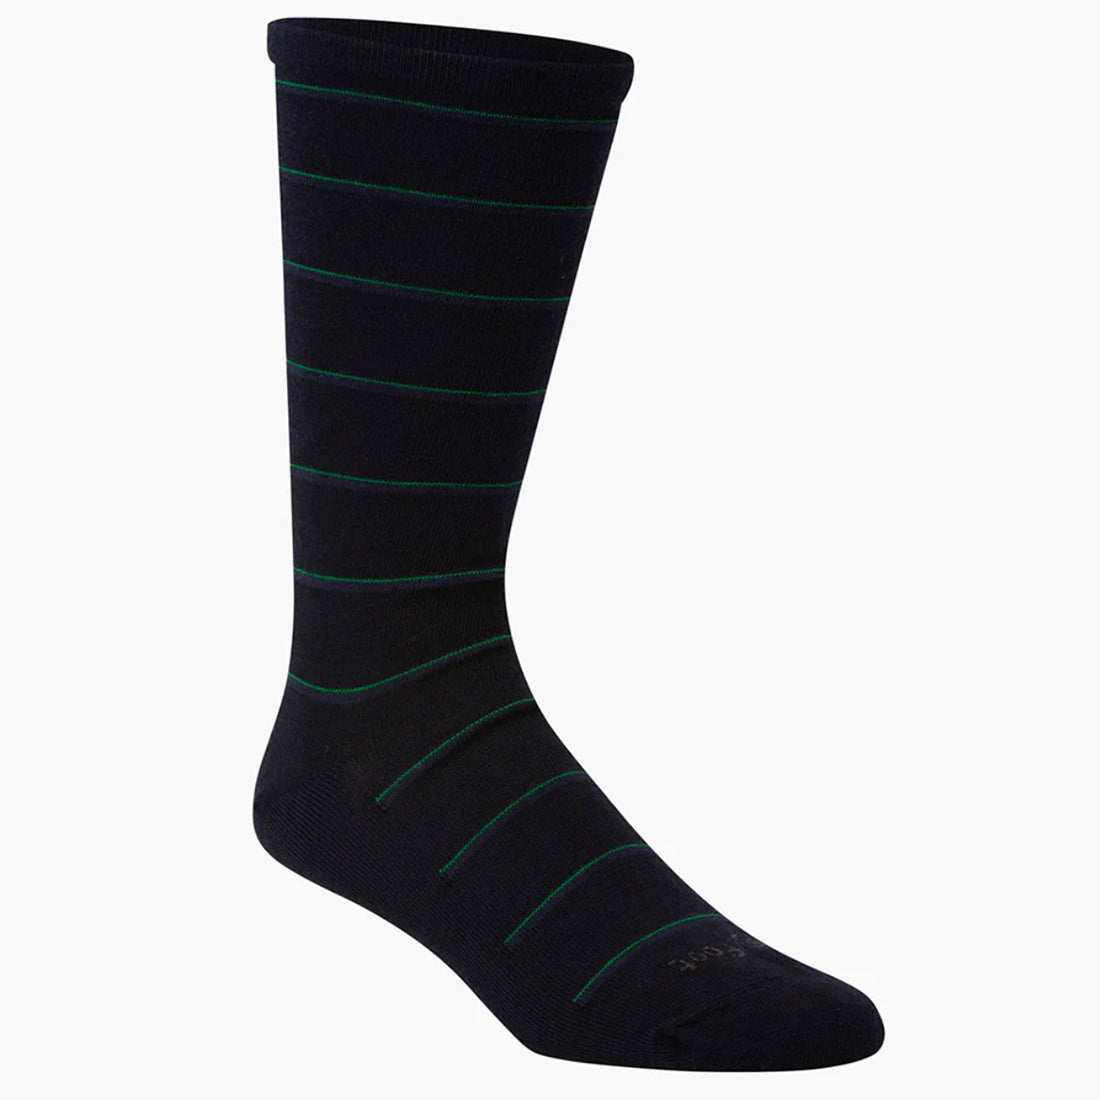 Pussyfoot Wool Non-Elastic Health Socks - Navy Stripe